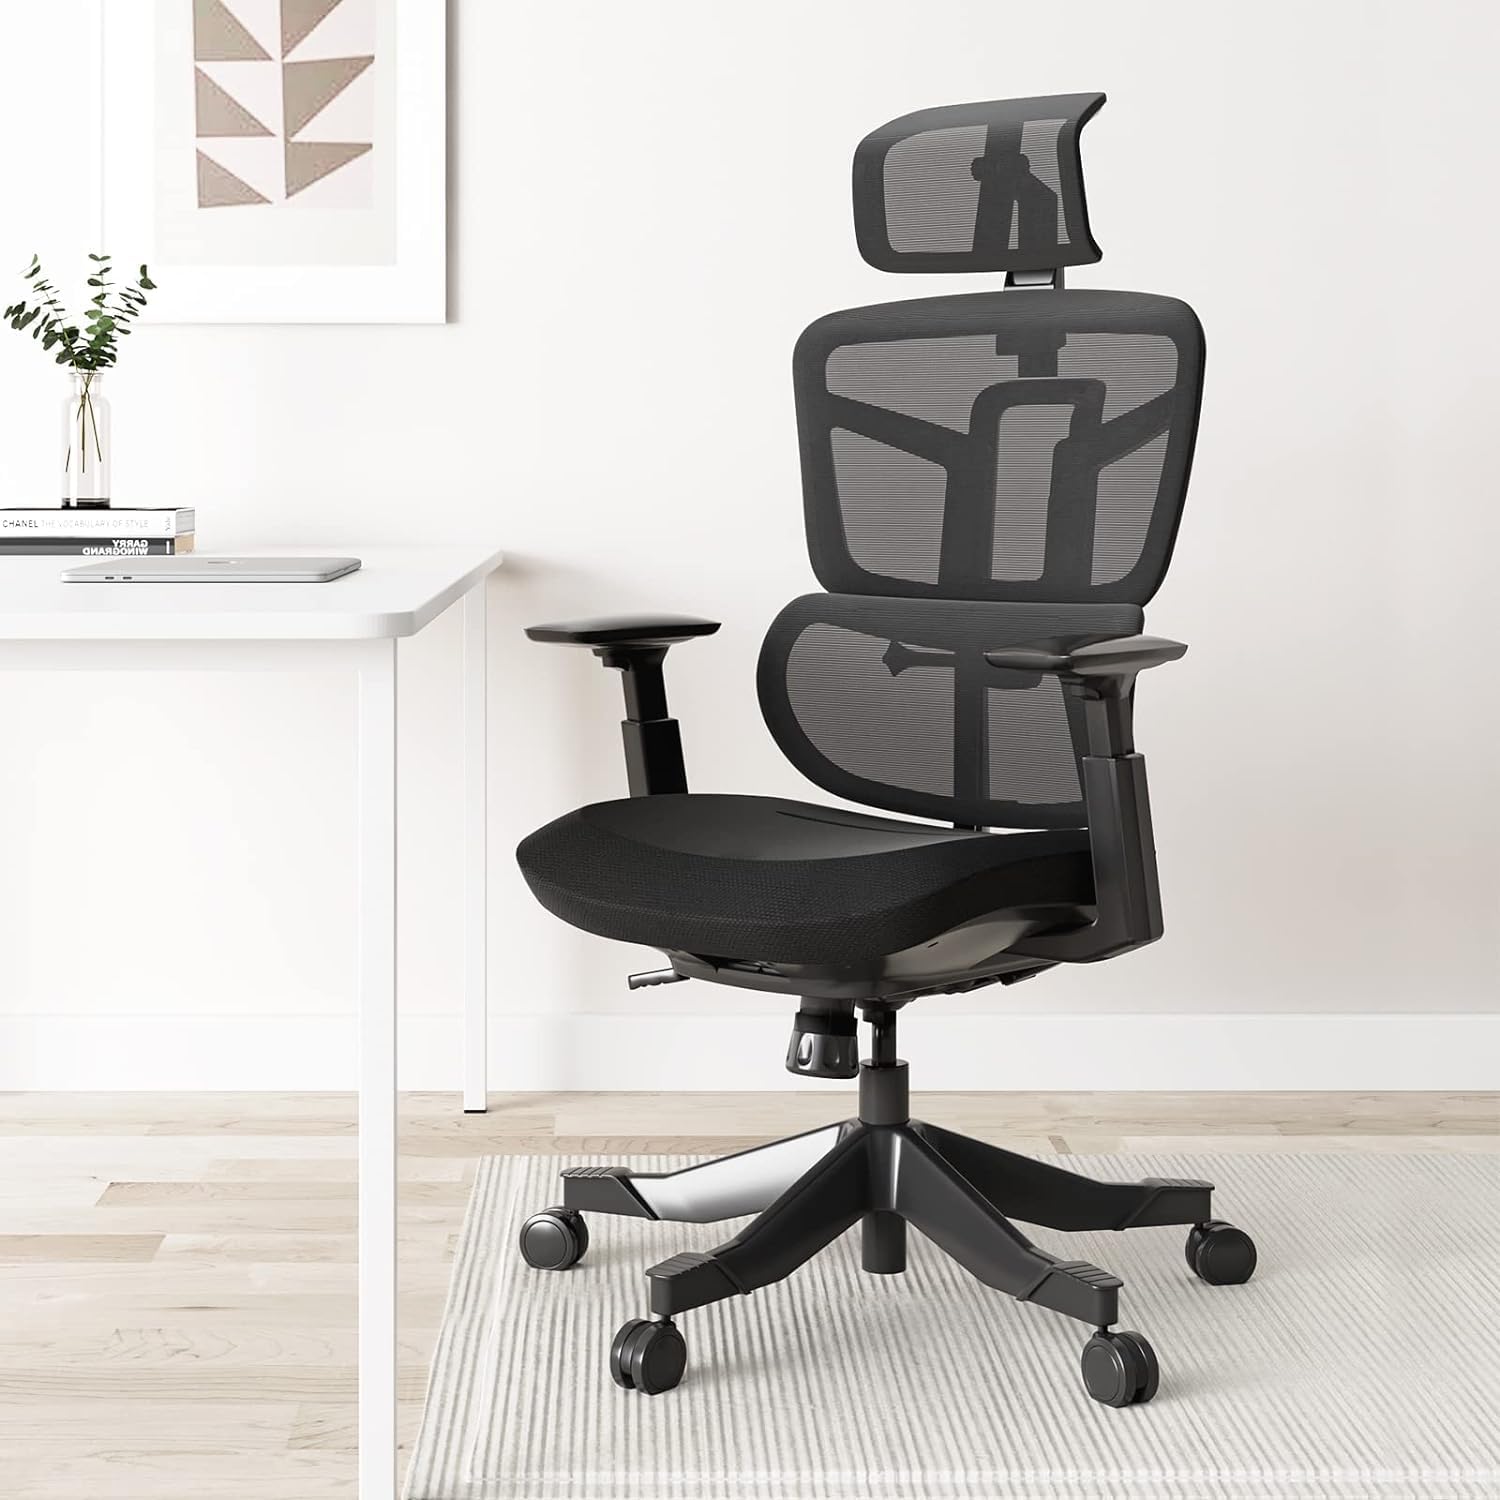 Hbada E8 Ergonomic Office Chair Elastic Adaptative Adjustment Back Lumbar Support Computer Chair High-Density Breathable Mesh Desk Chair with 115° Rocking,Black